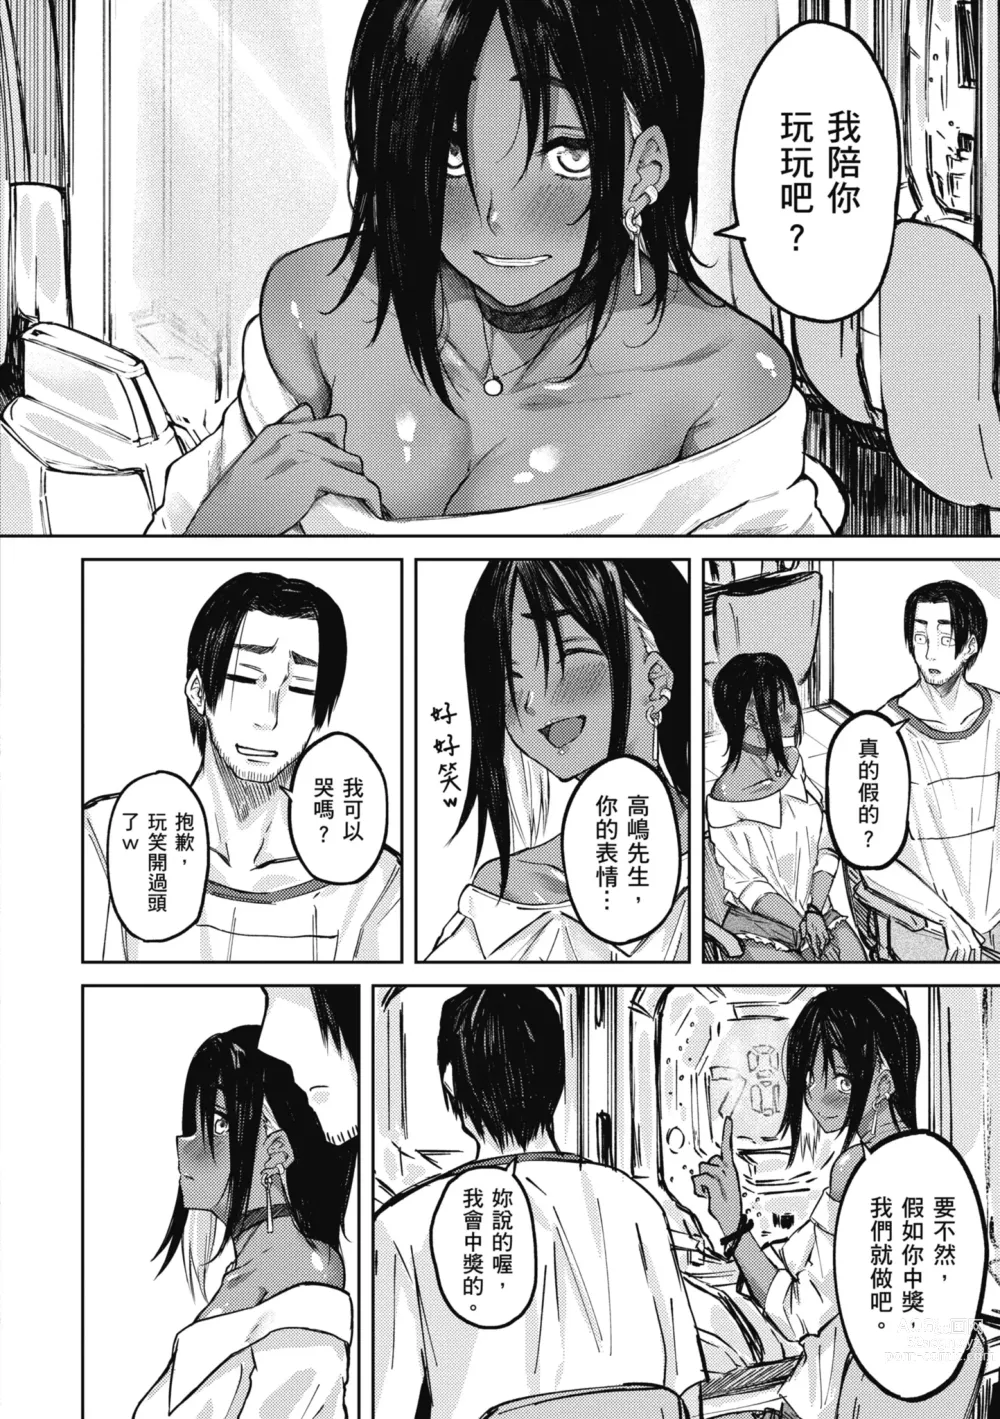 Page 6 of manga 性愛幸運兒 (decensored)